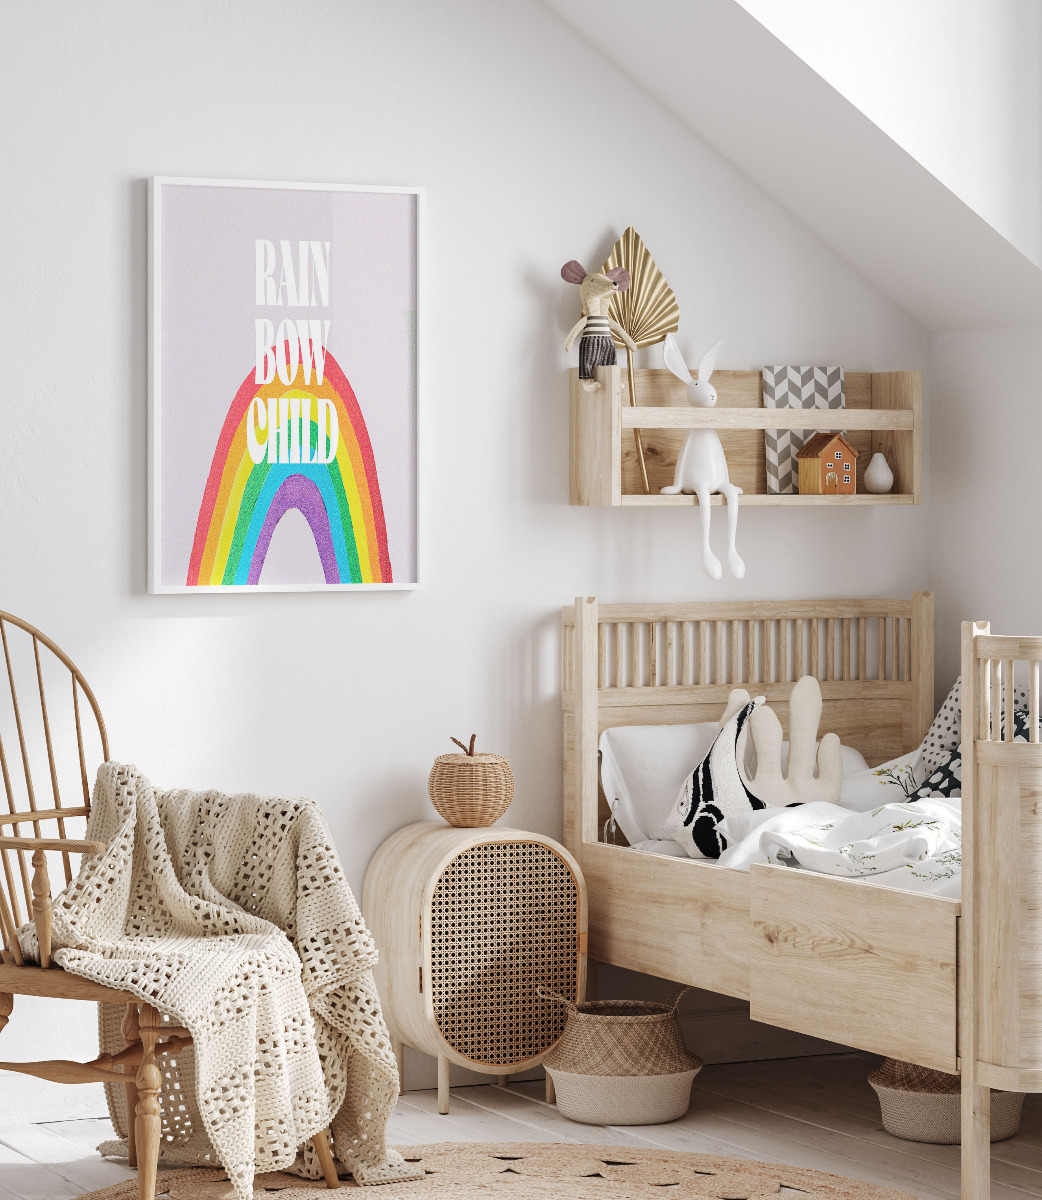 Rainbow Child framed wall art in a kids bedroom